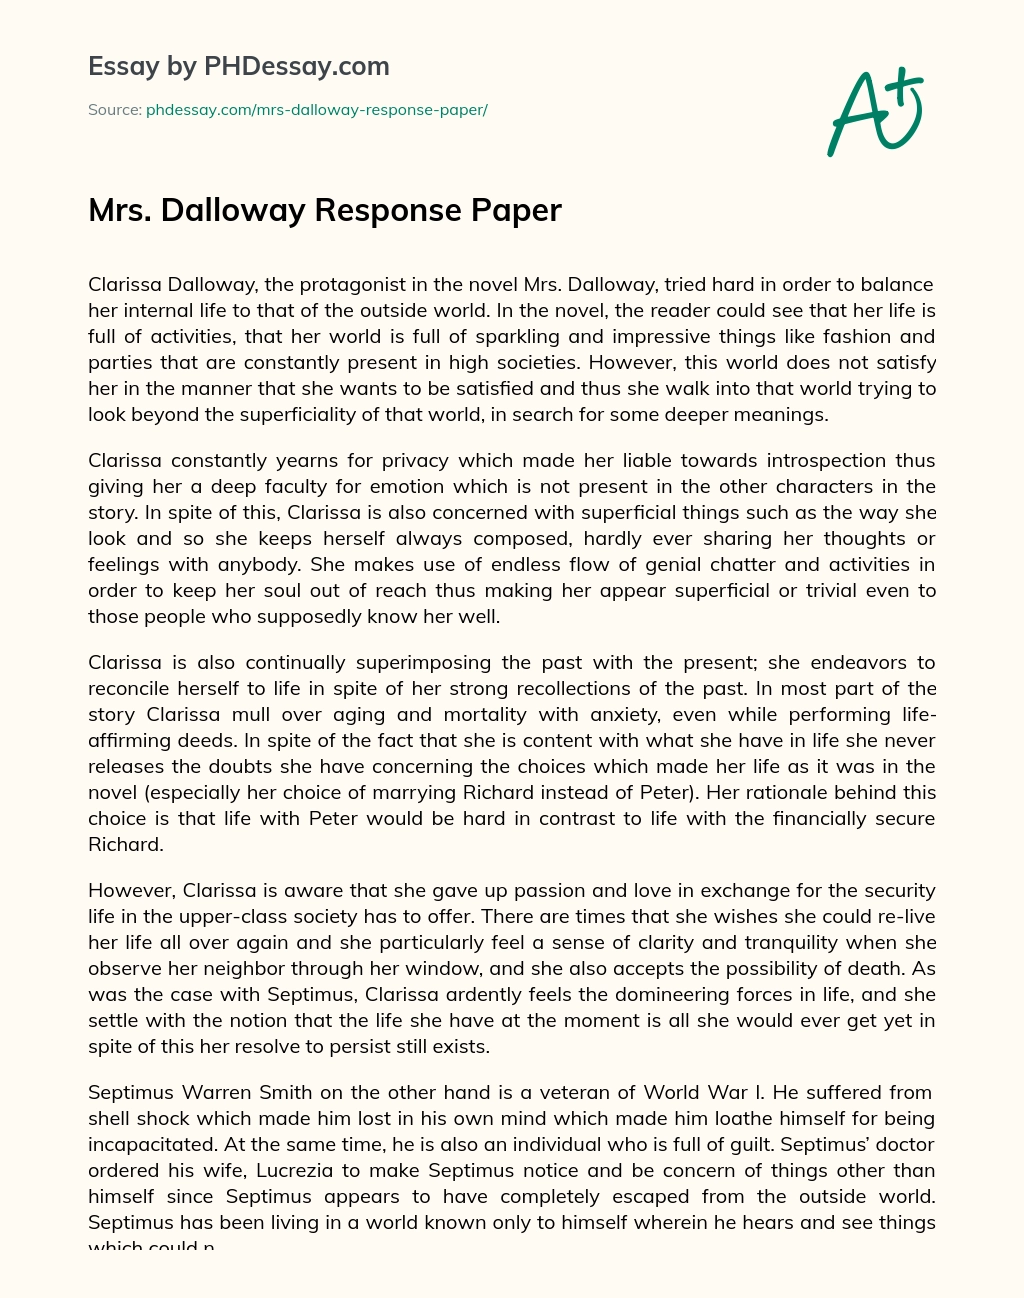 Mrs. Dalloway Response Paper essay